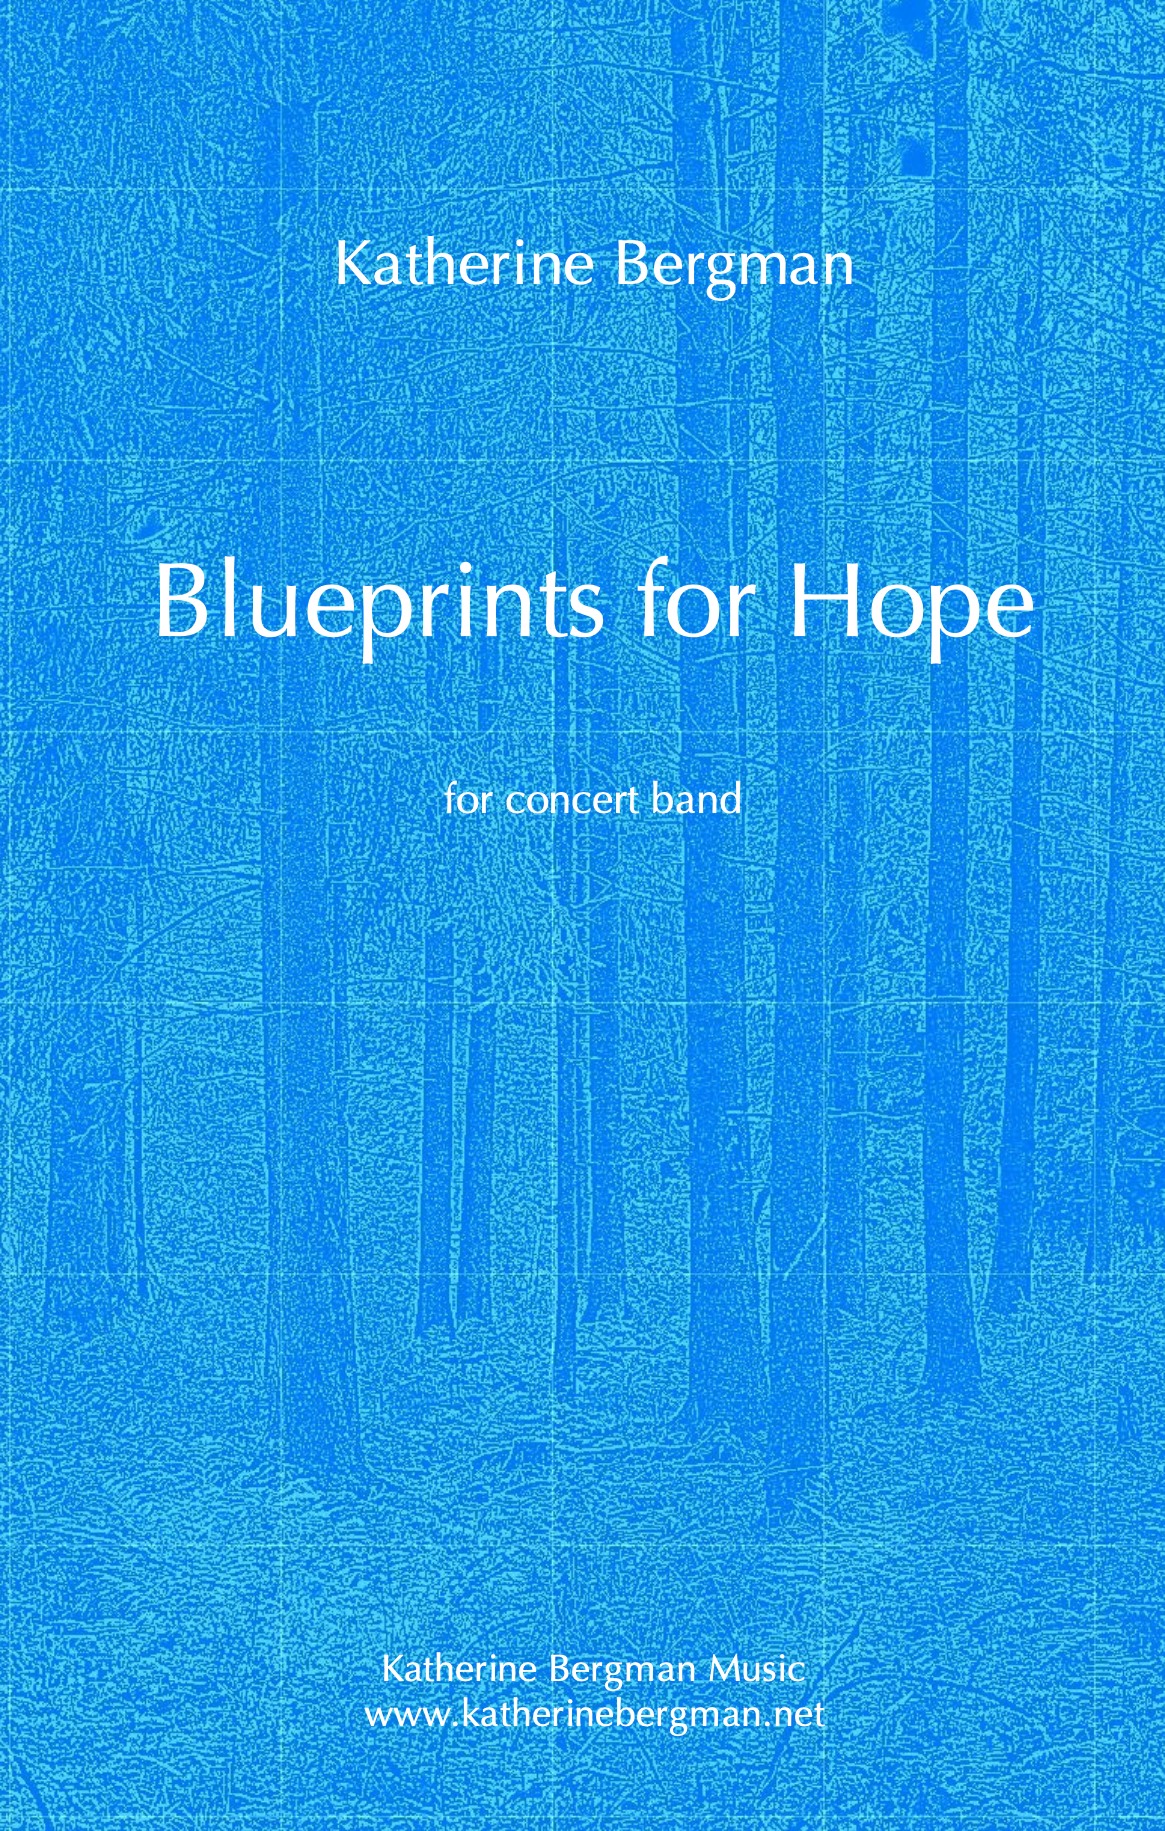 Blueprints For Hope by Katherine Bergman